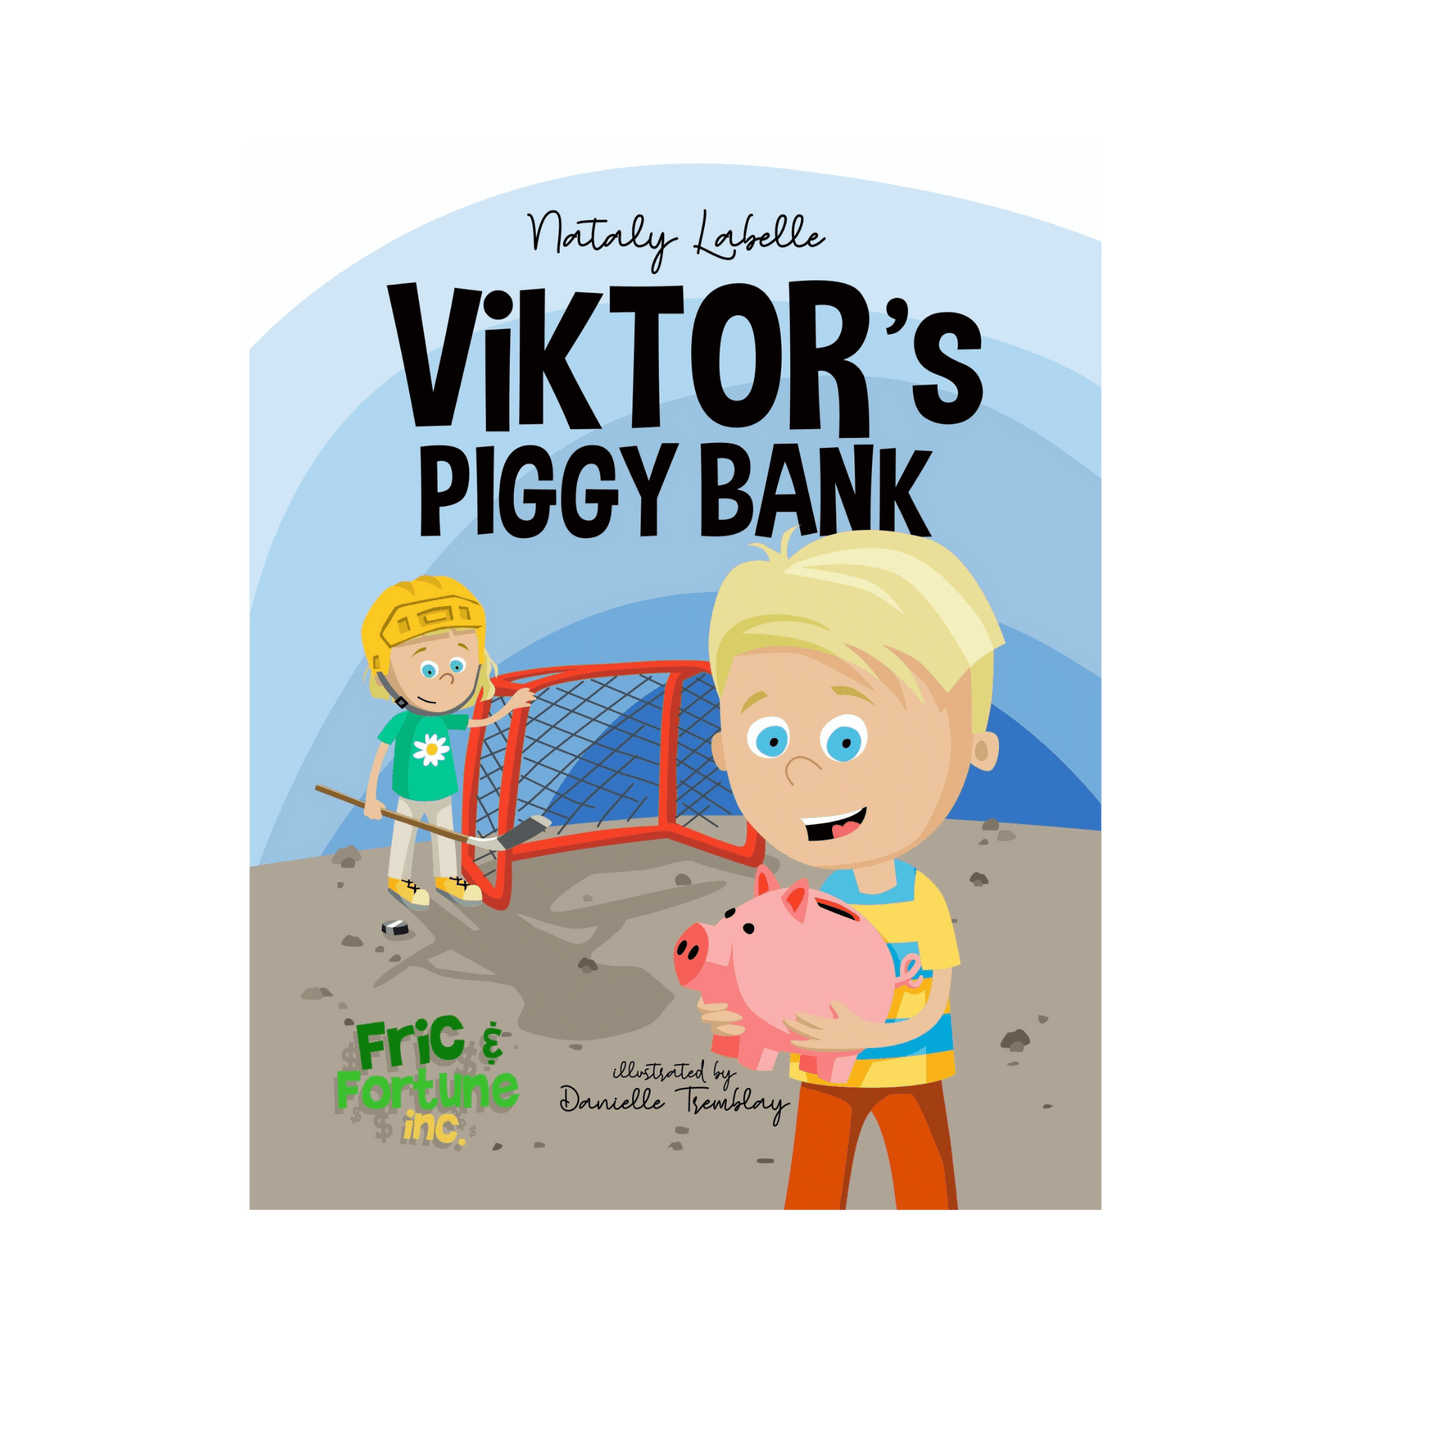 Viktor's piggy bank and book